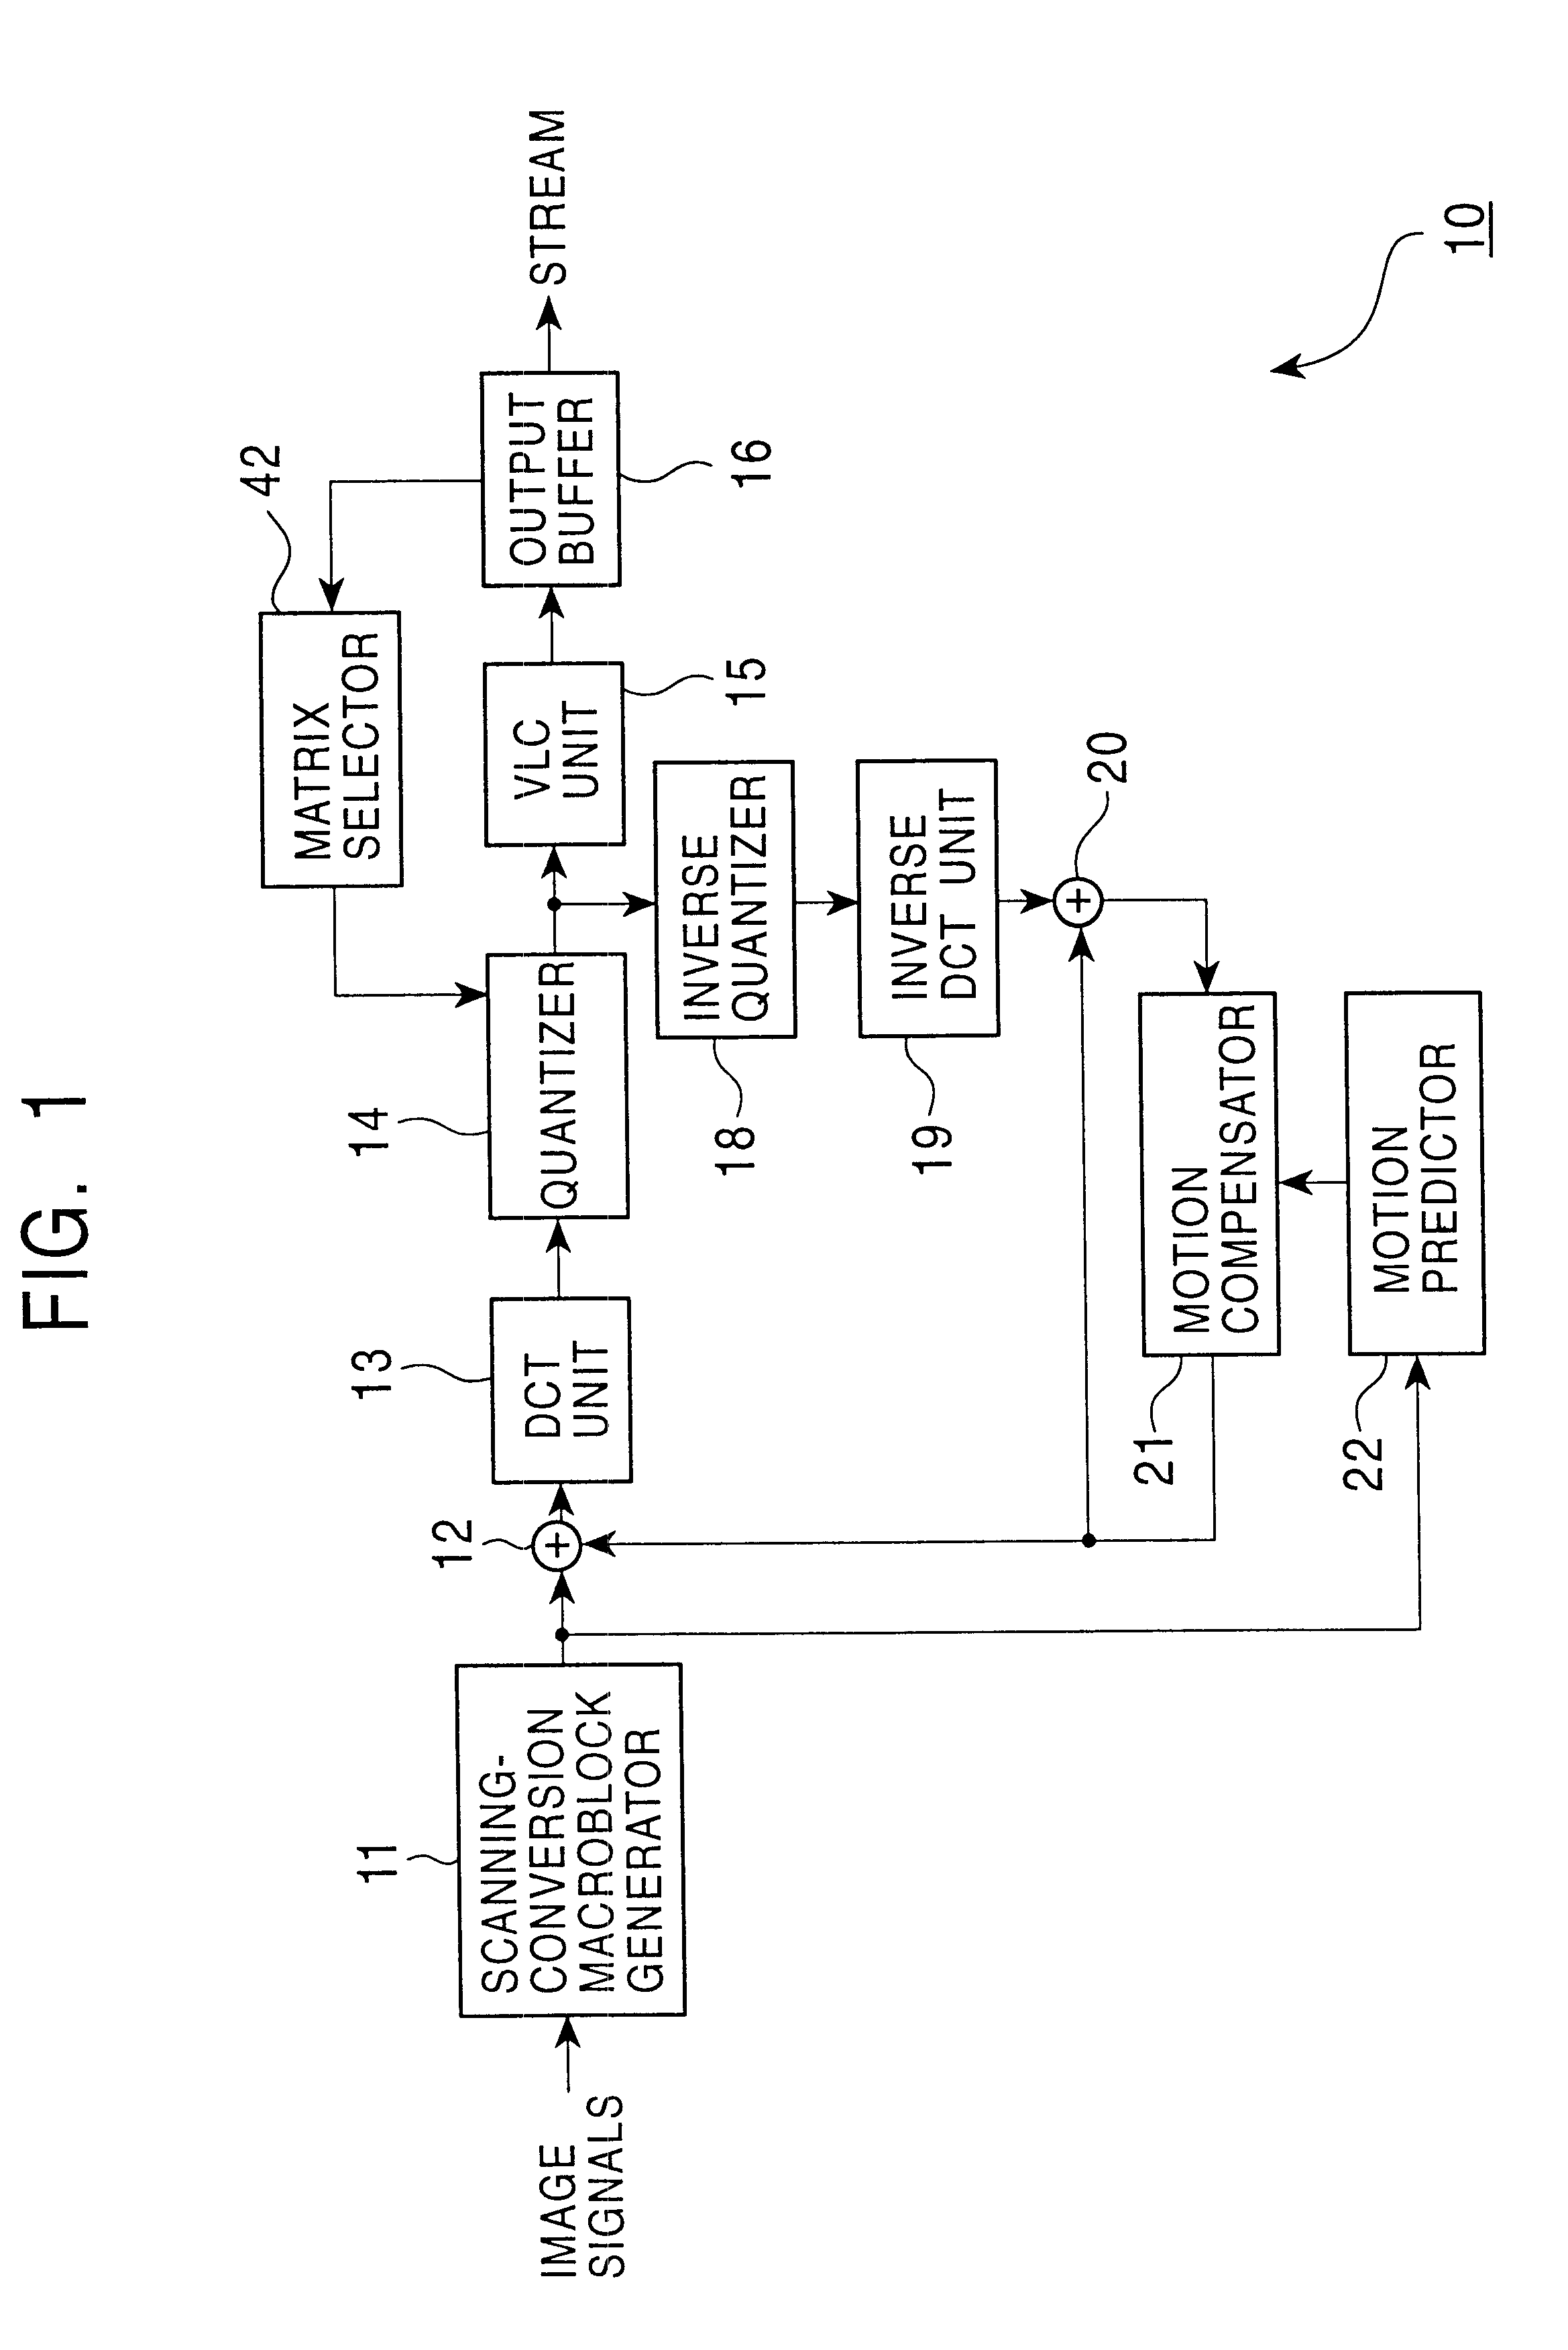 Encoding apparatus and method